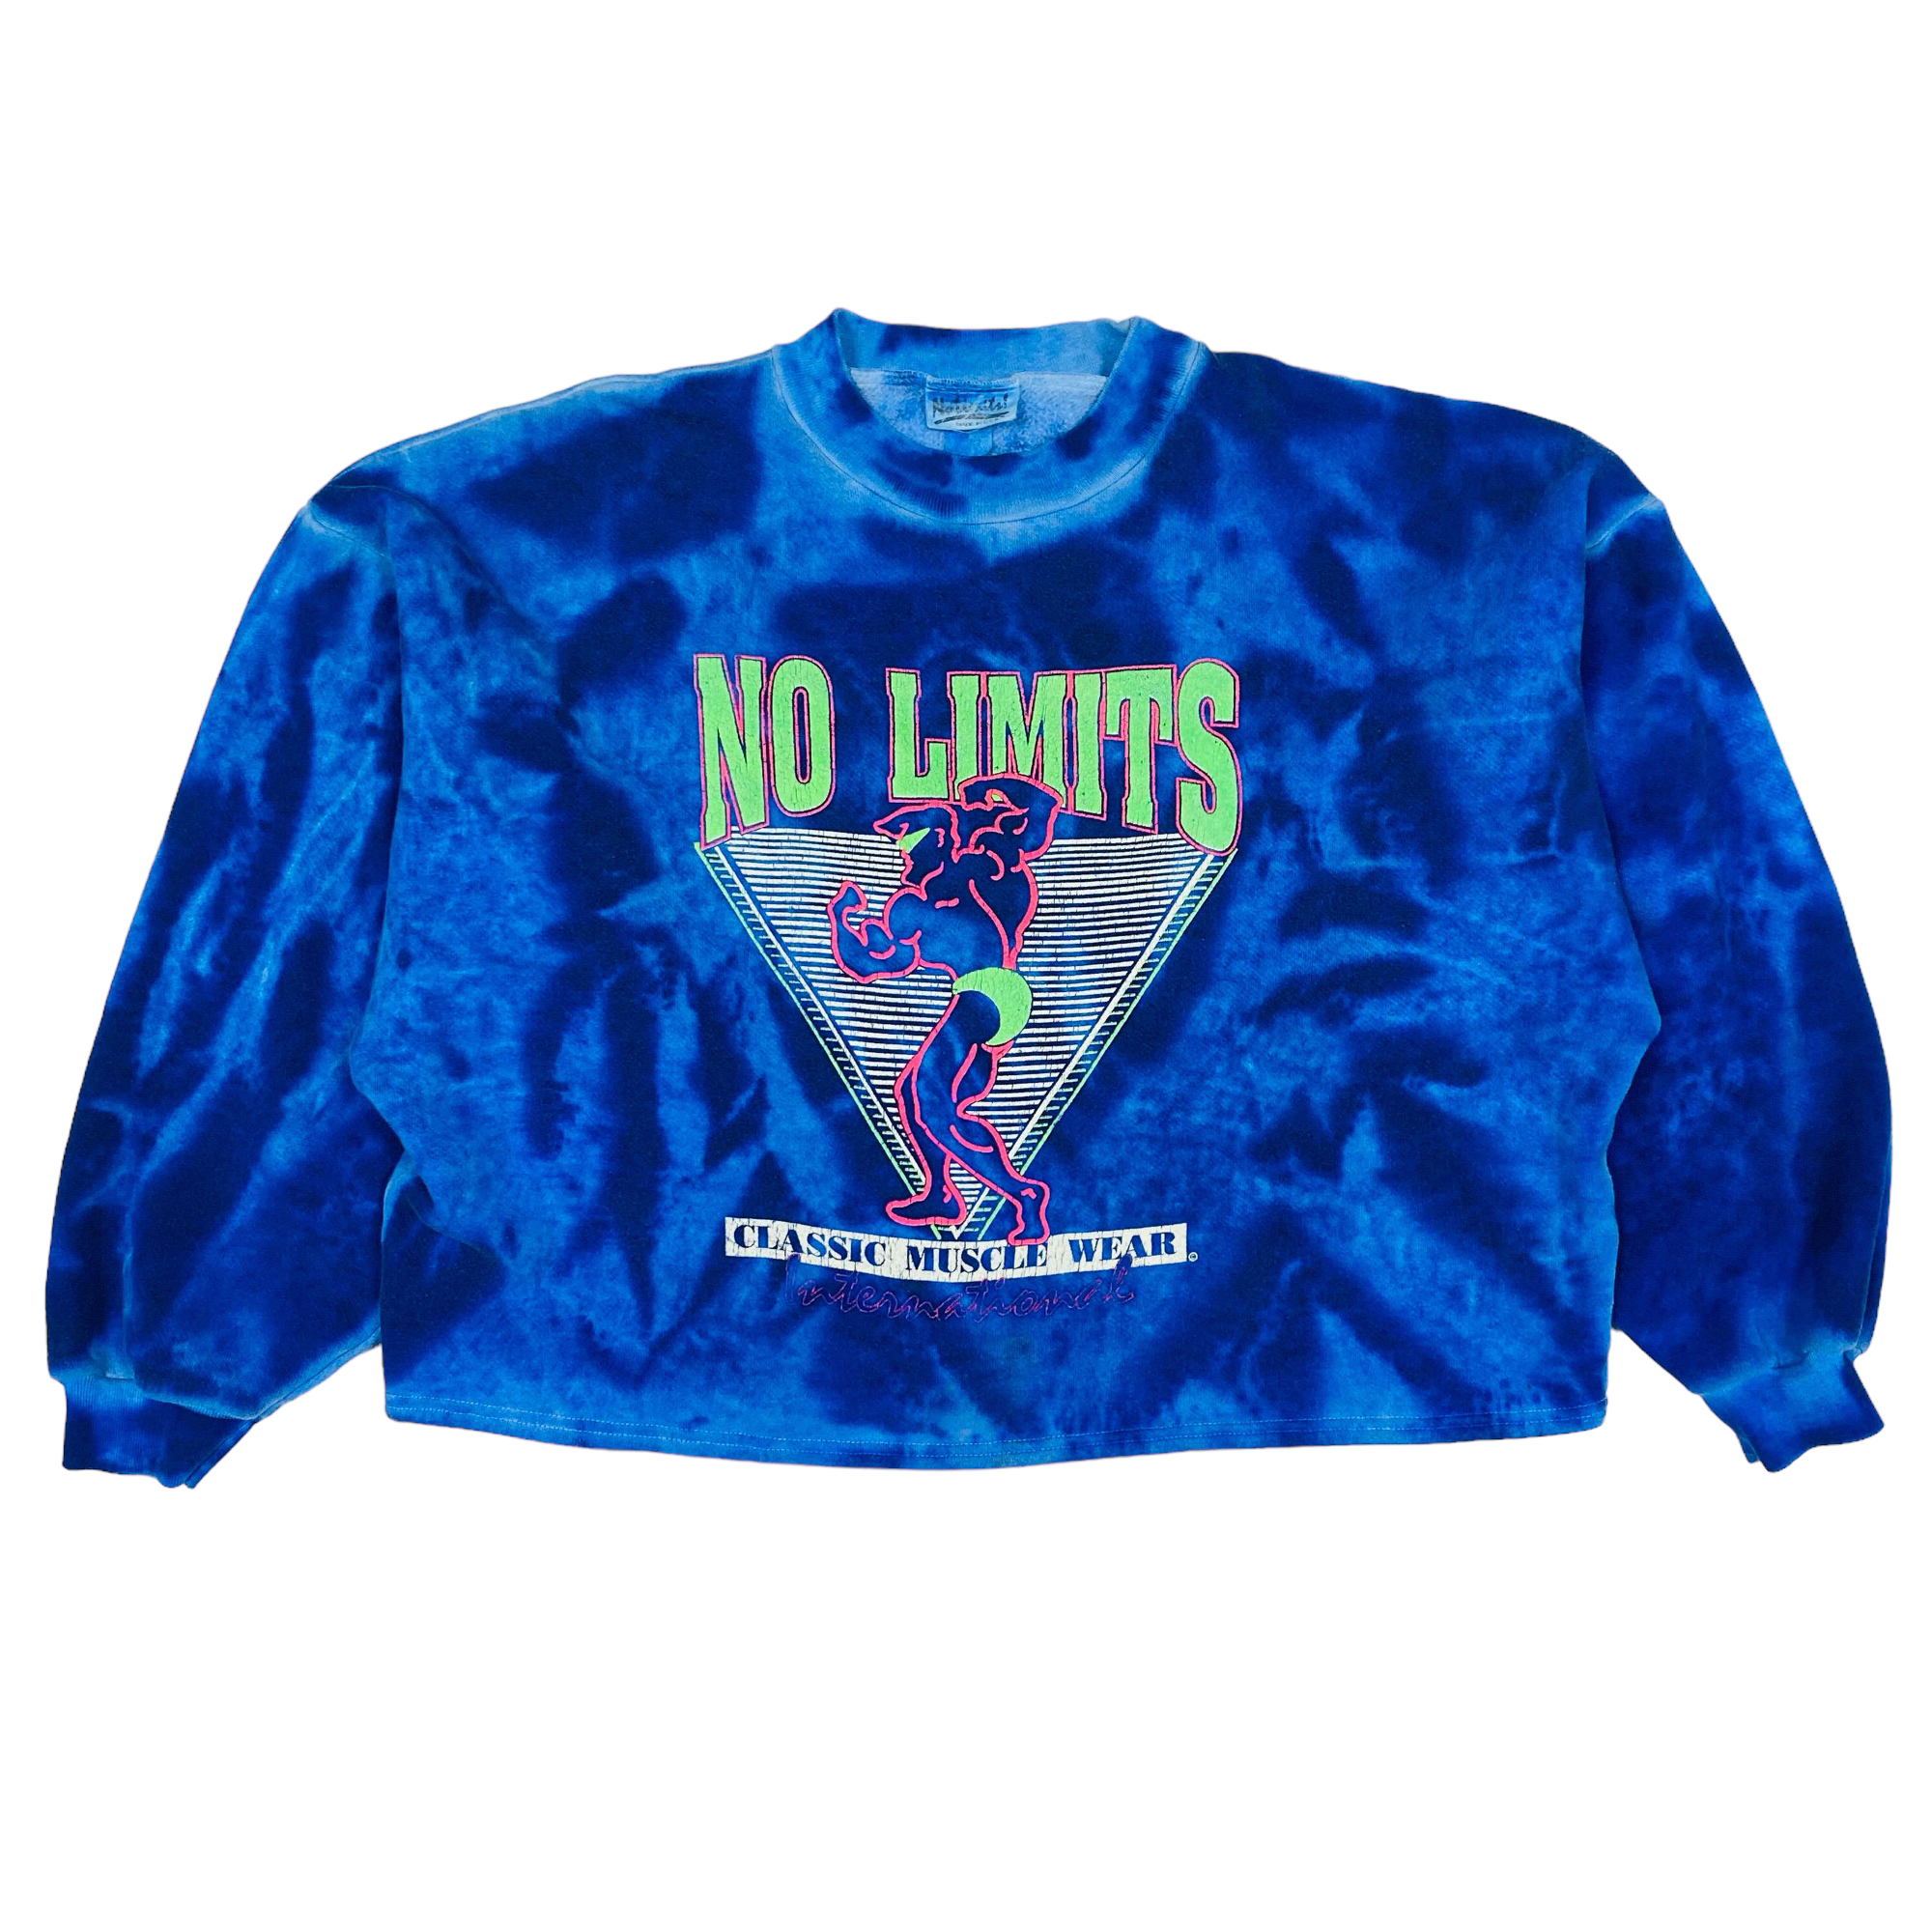 No Limits Classic Muscle Wear Cropped Sweatshirt - 2XL